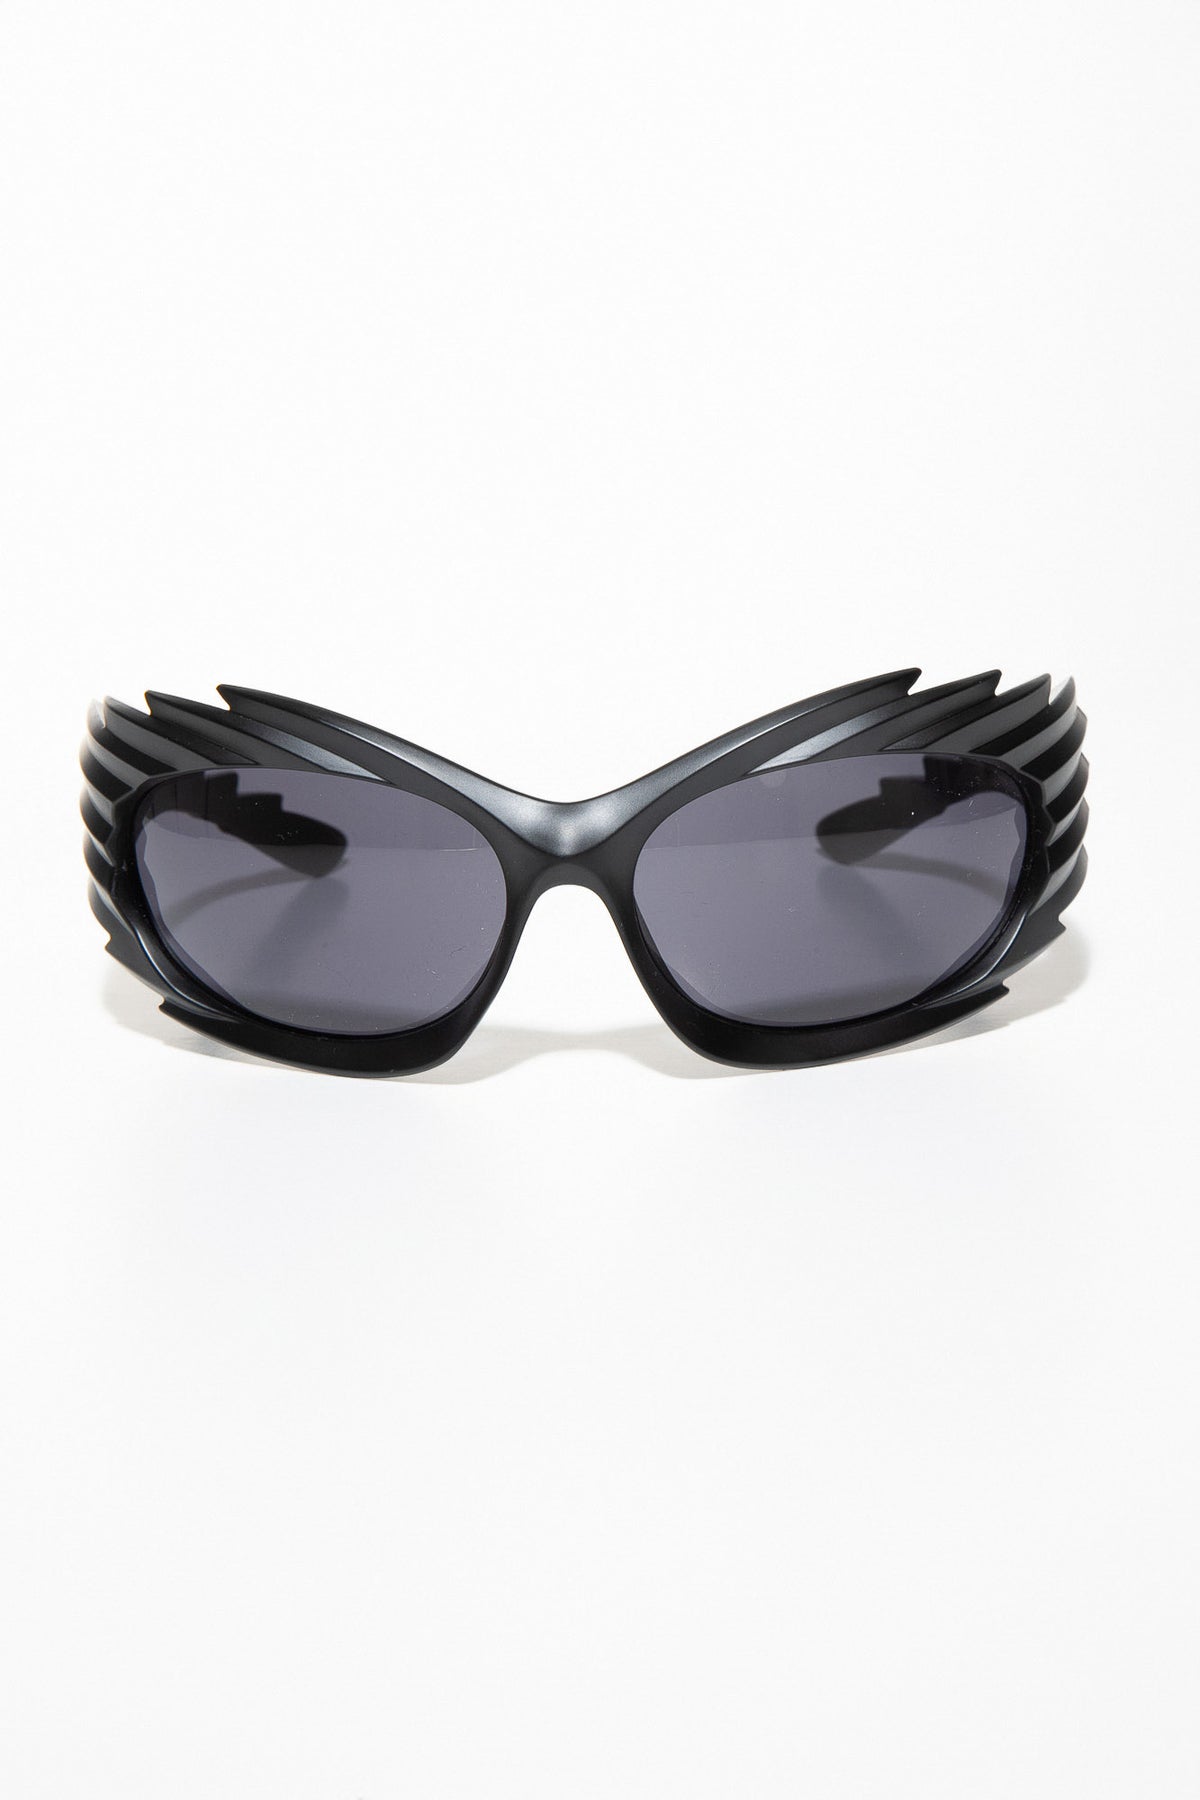 
              Exile Oval Shaped Ridged Sunglasses - Black - Swank A Posh
            